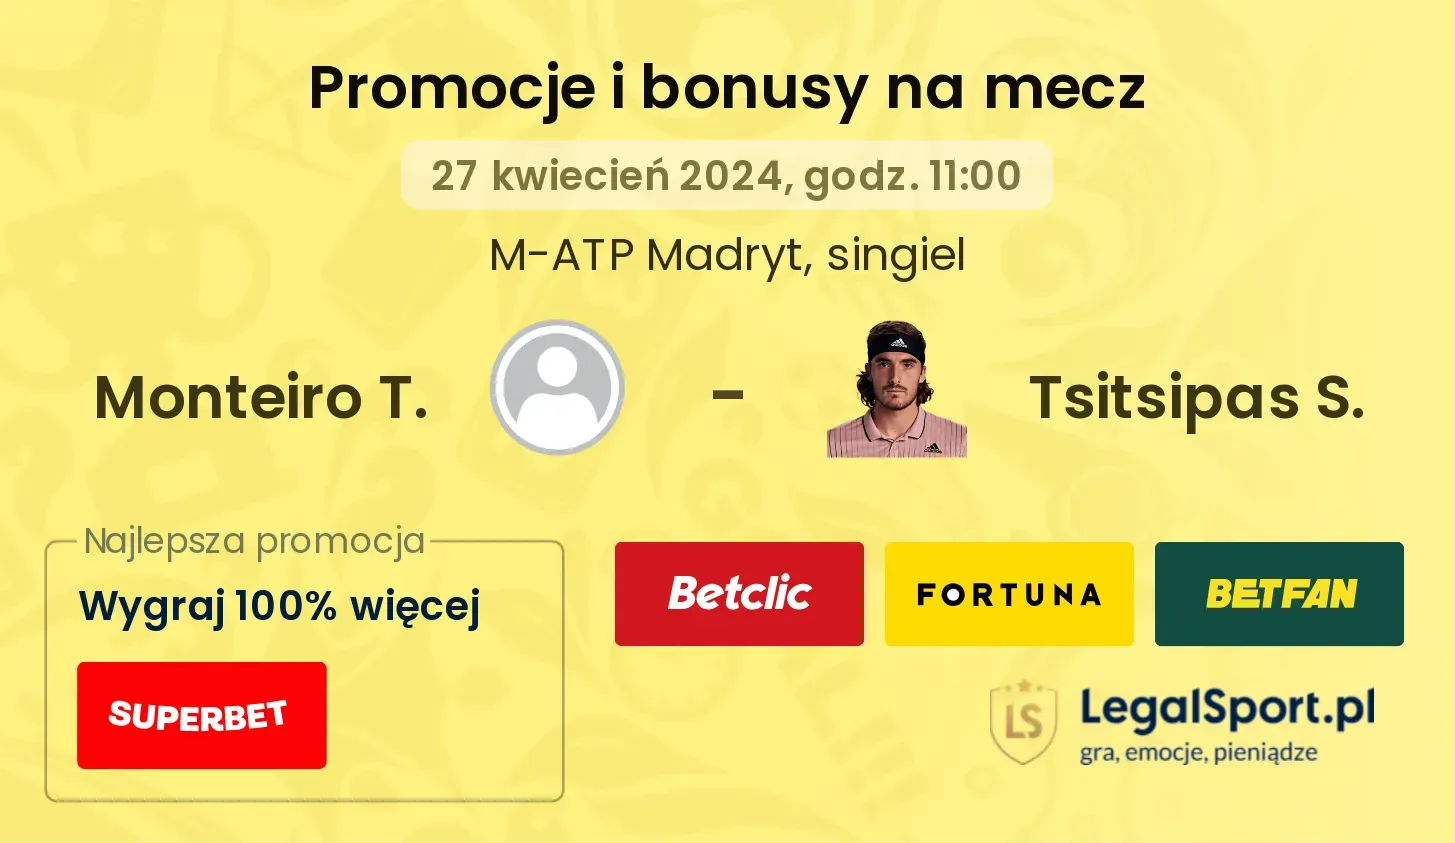 Monteiro T. - Tsitsipas S. promocje bonusy na mecz